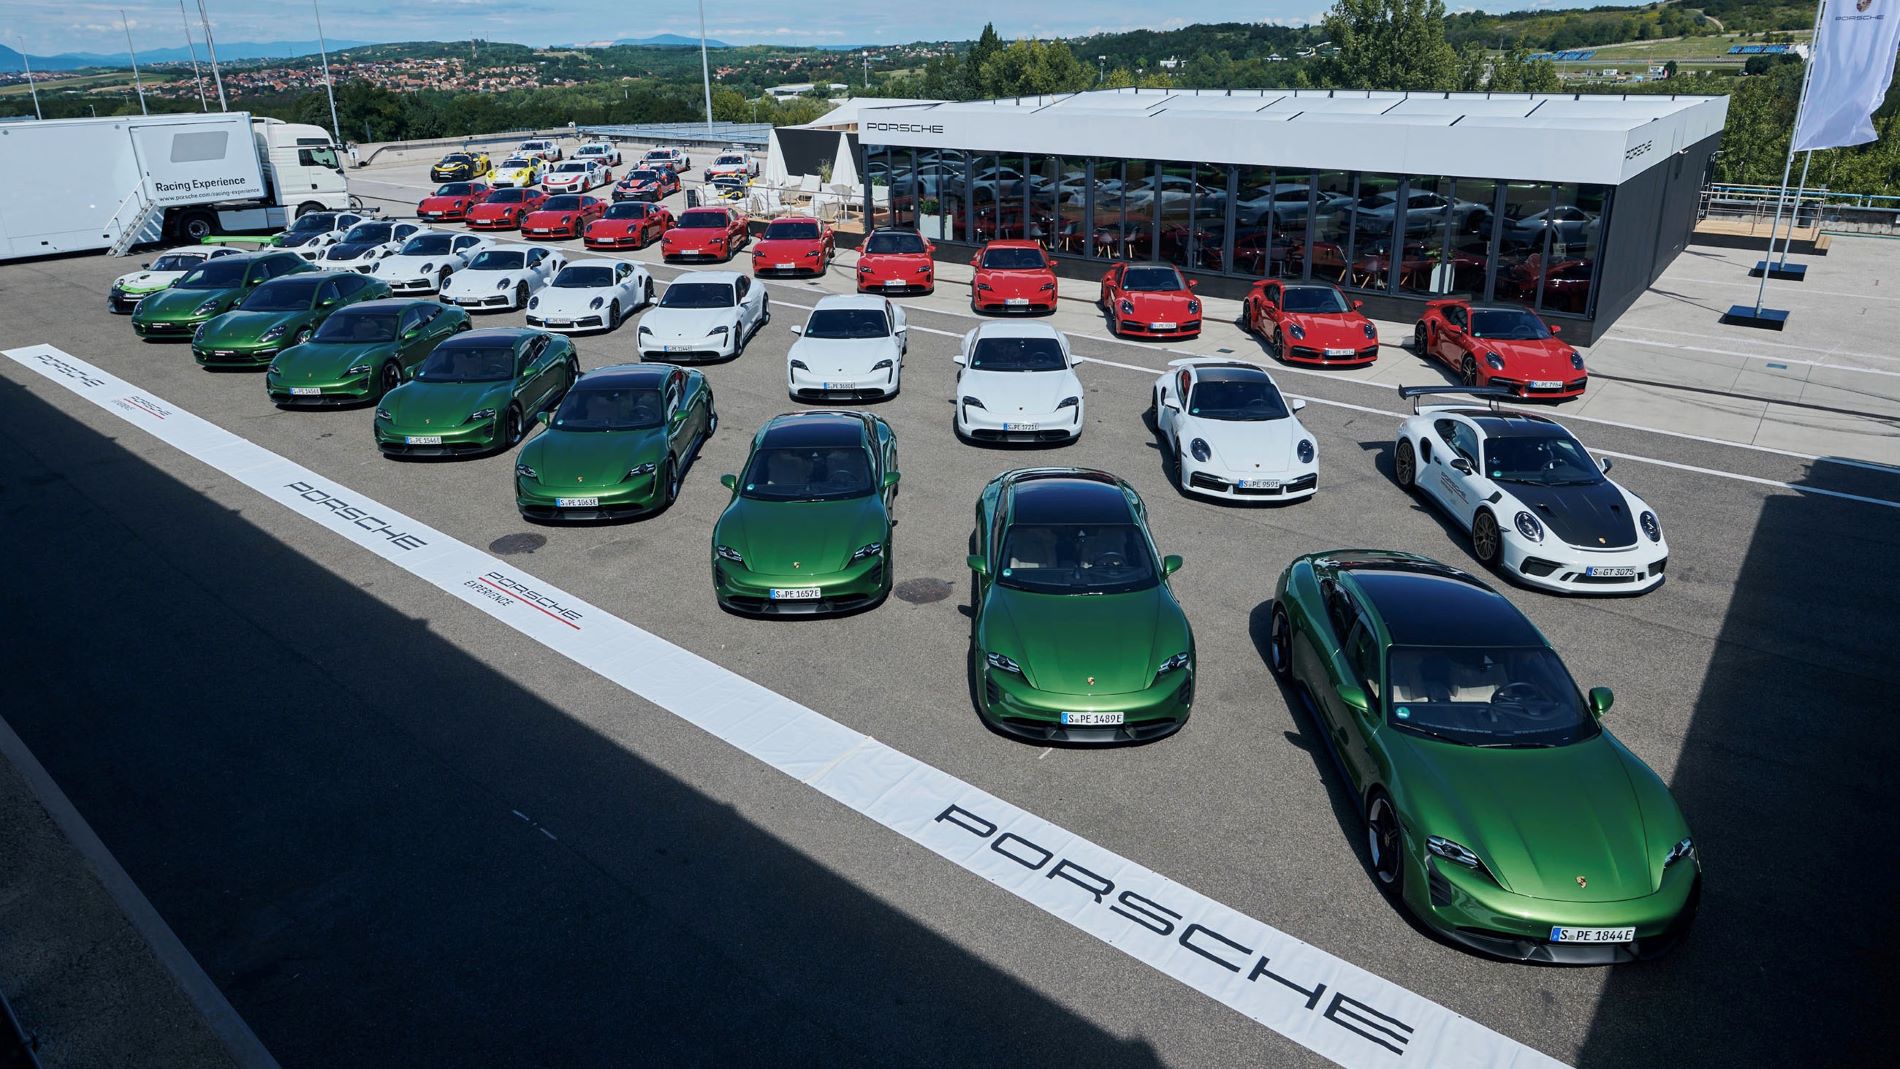 Porsche Mobile Charger Event